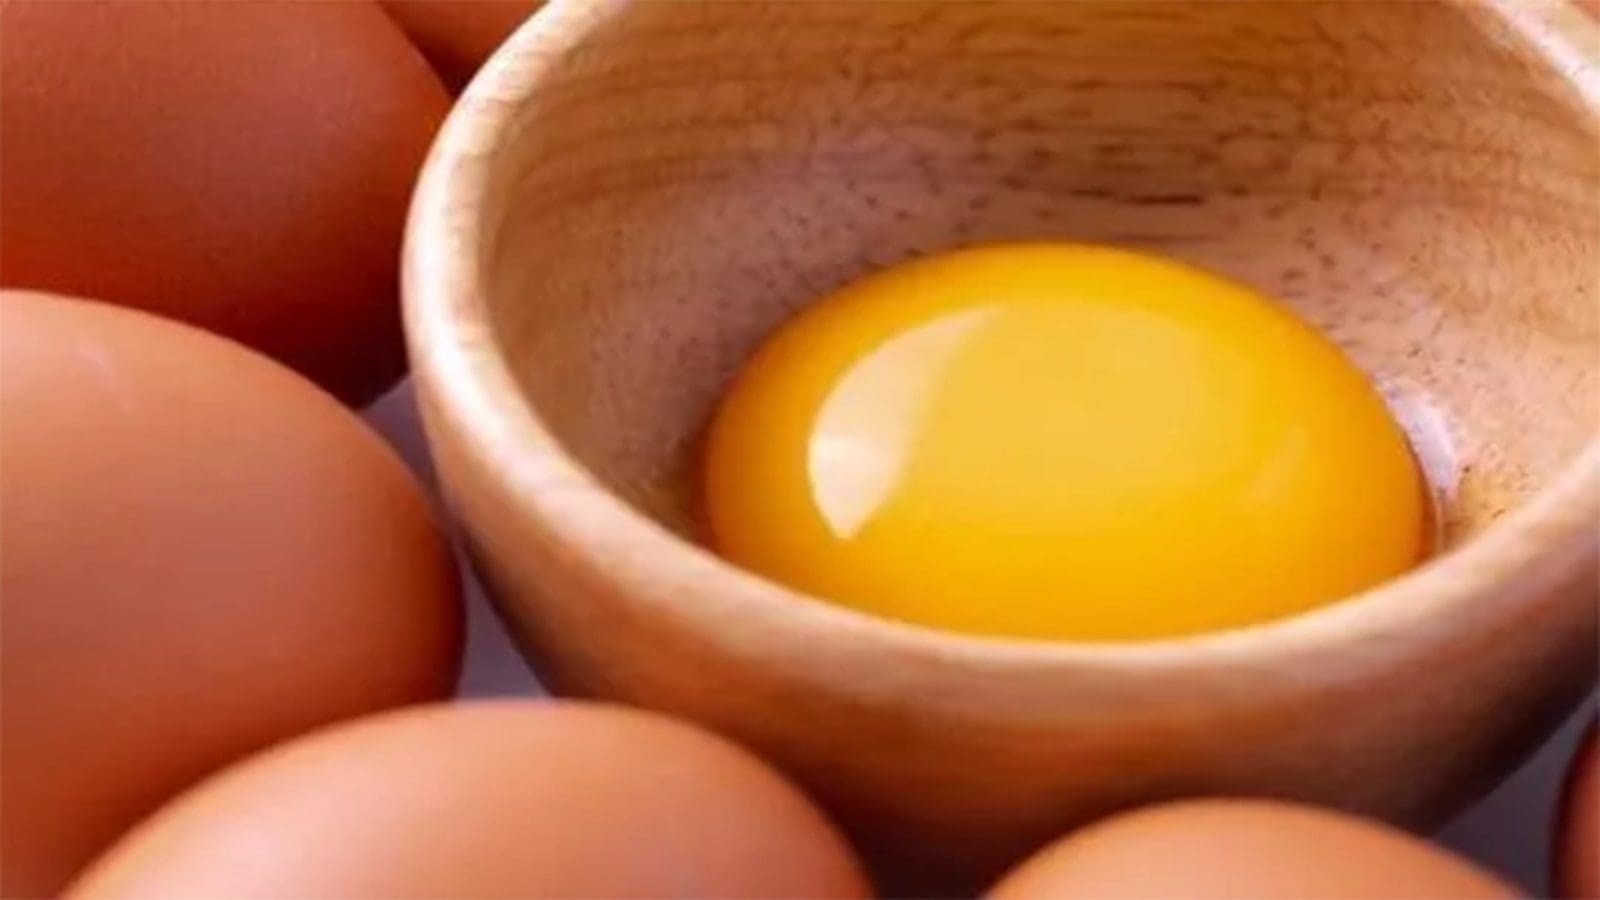 DTU National Food Institute find PFAs in organic egg yolks